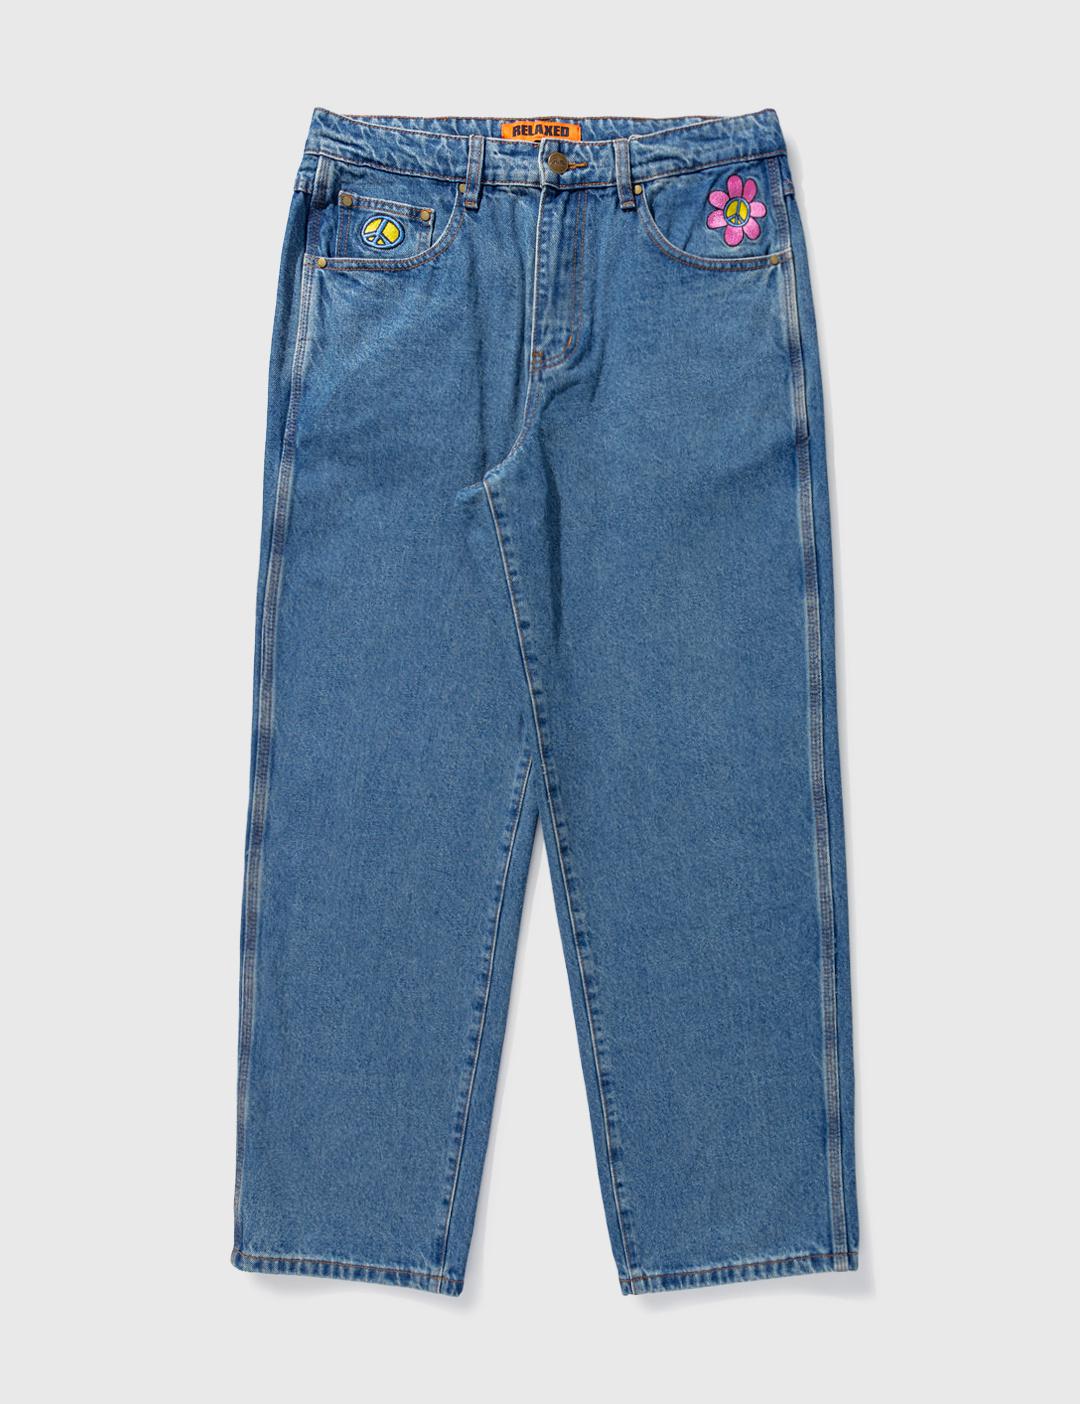 Flower Denim Jeans by BUTTER GOODS